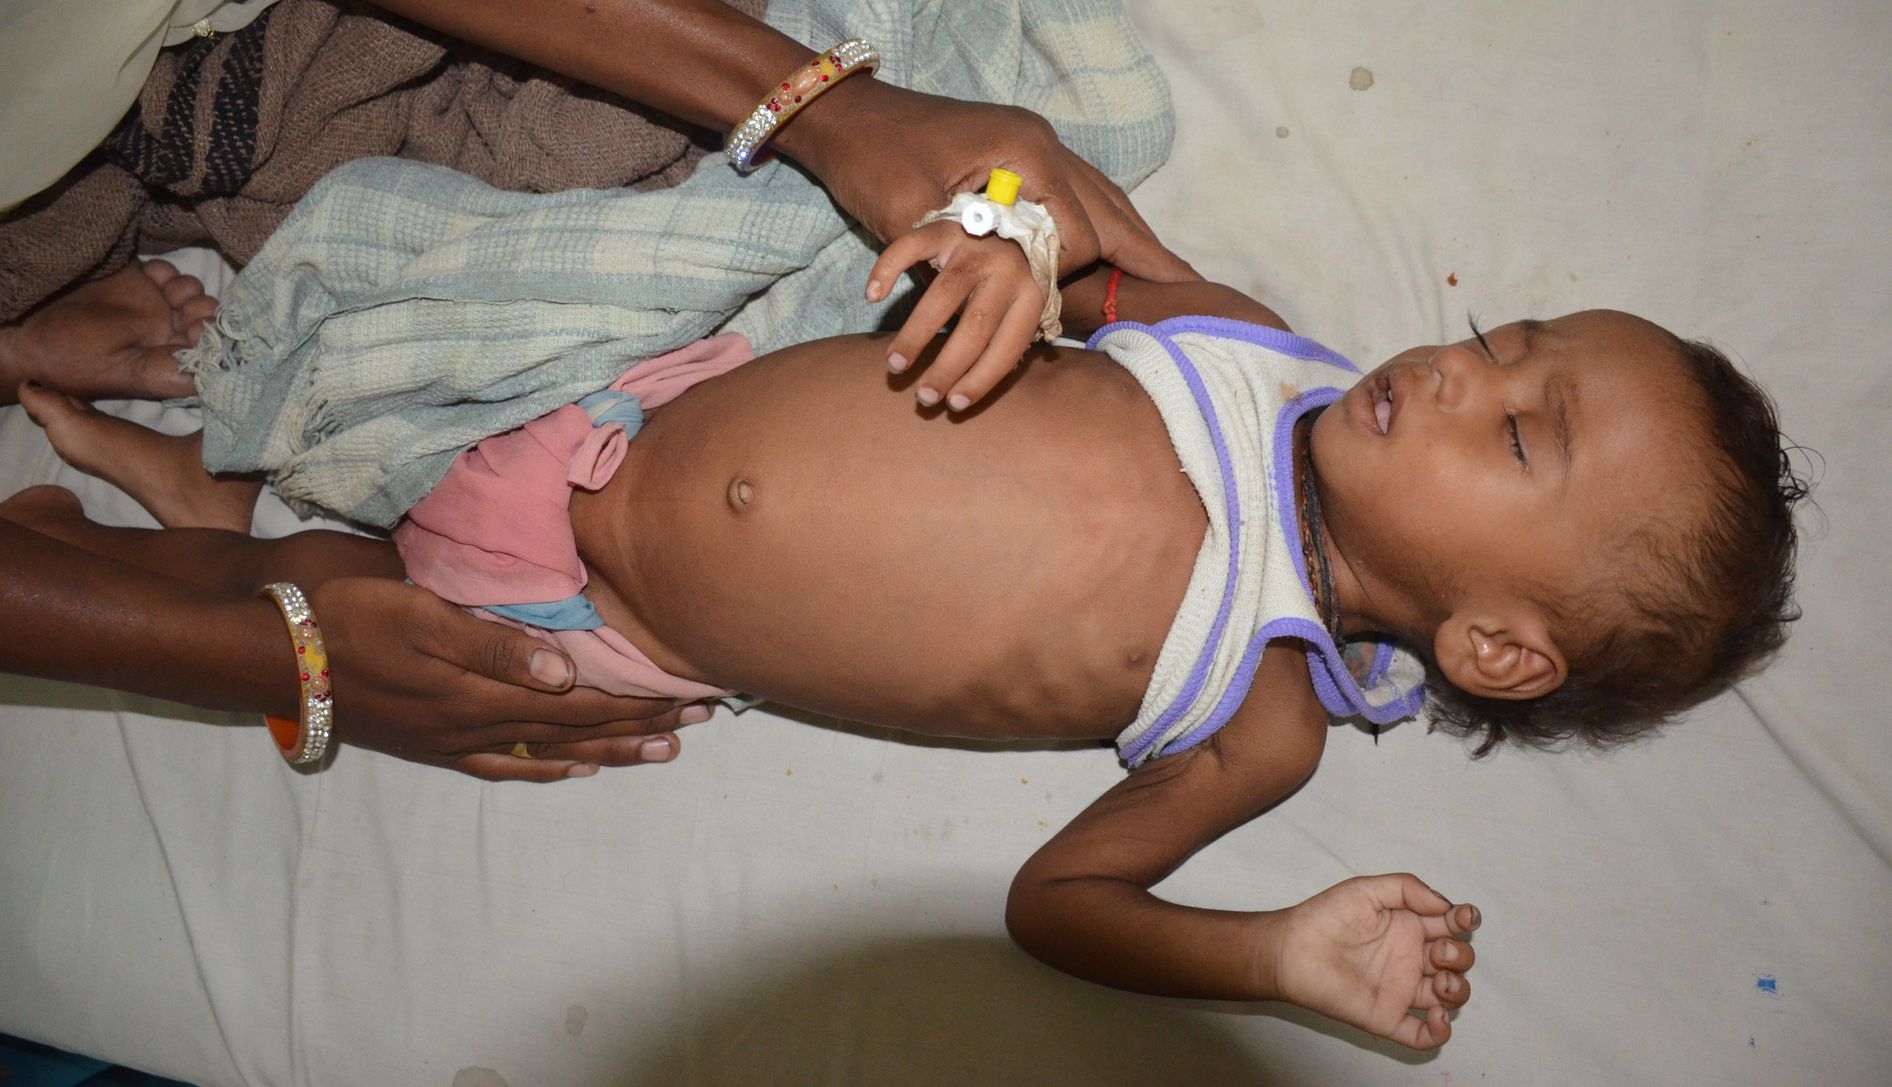 Malnutrition damaged the child's health in khandwa